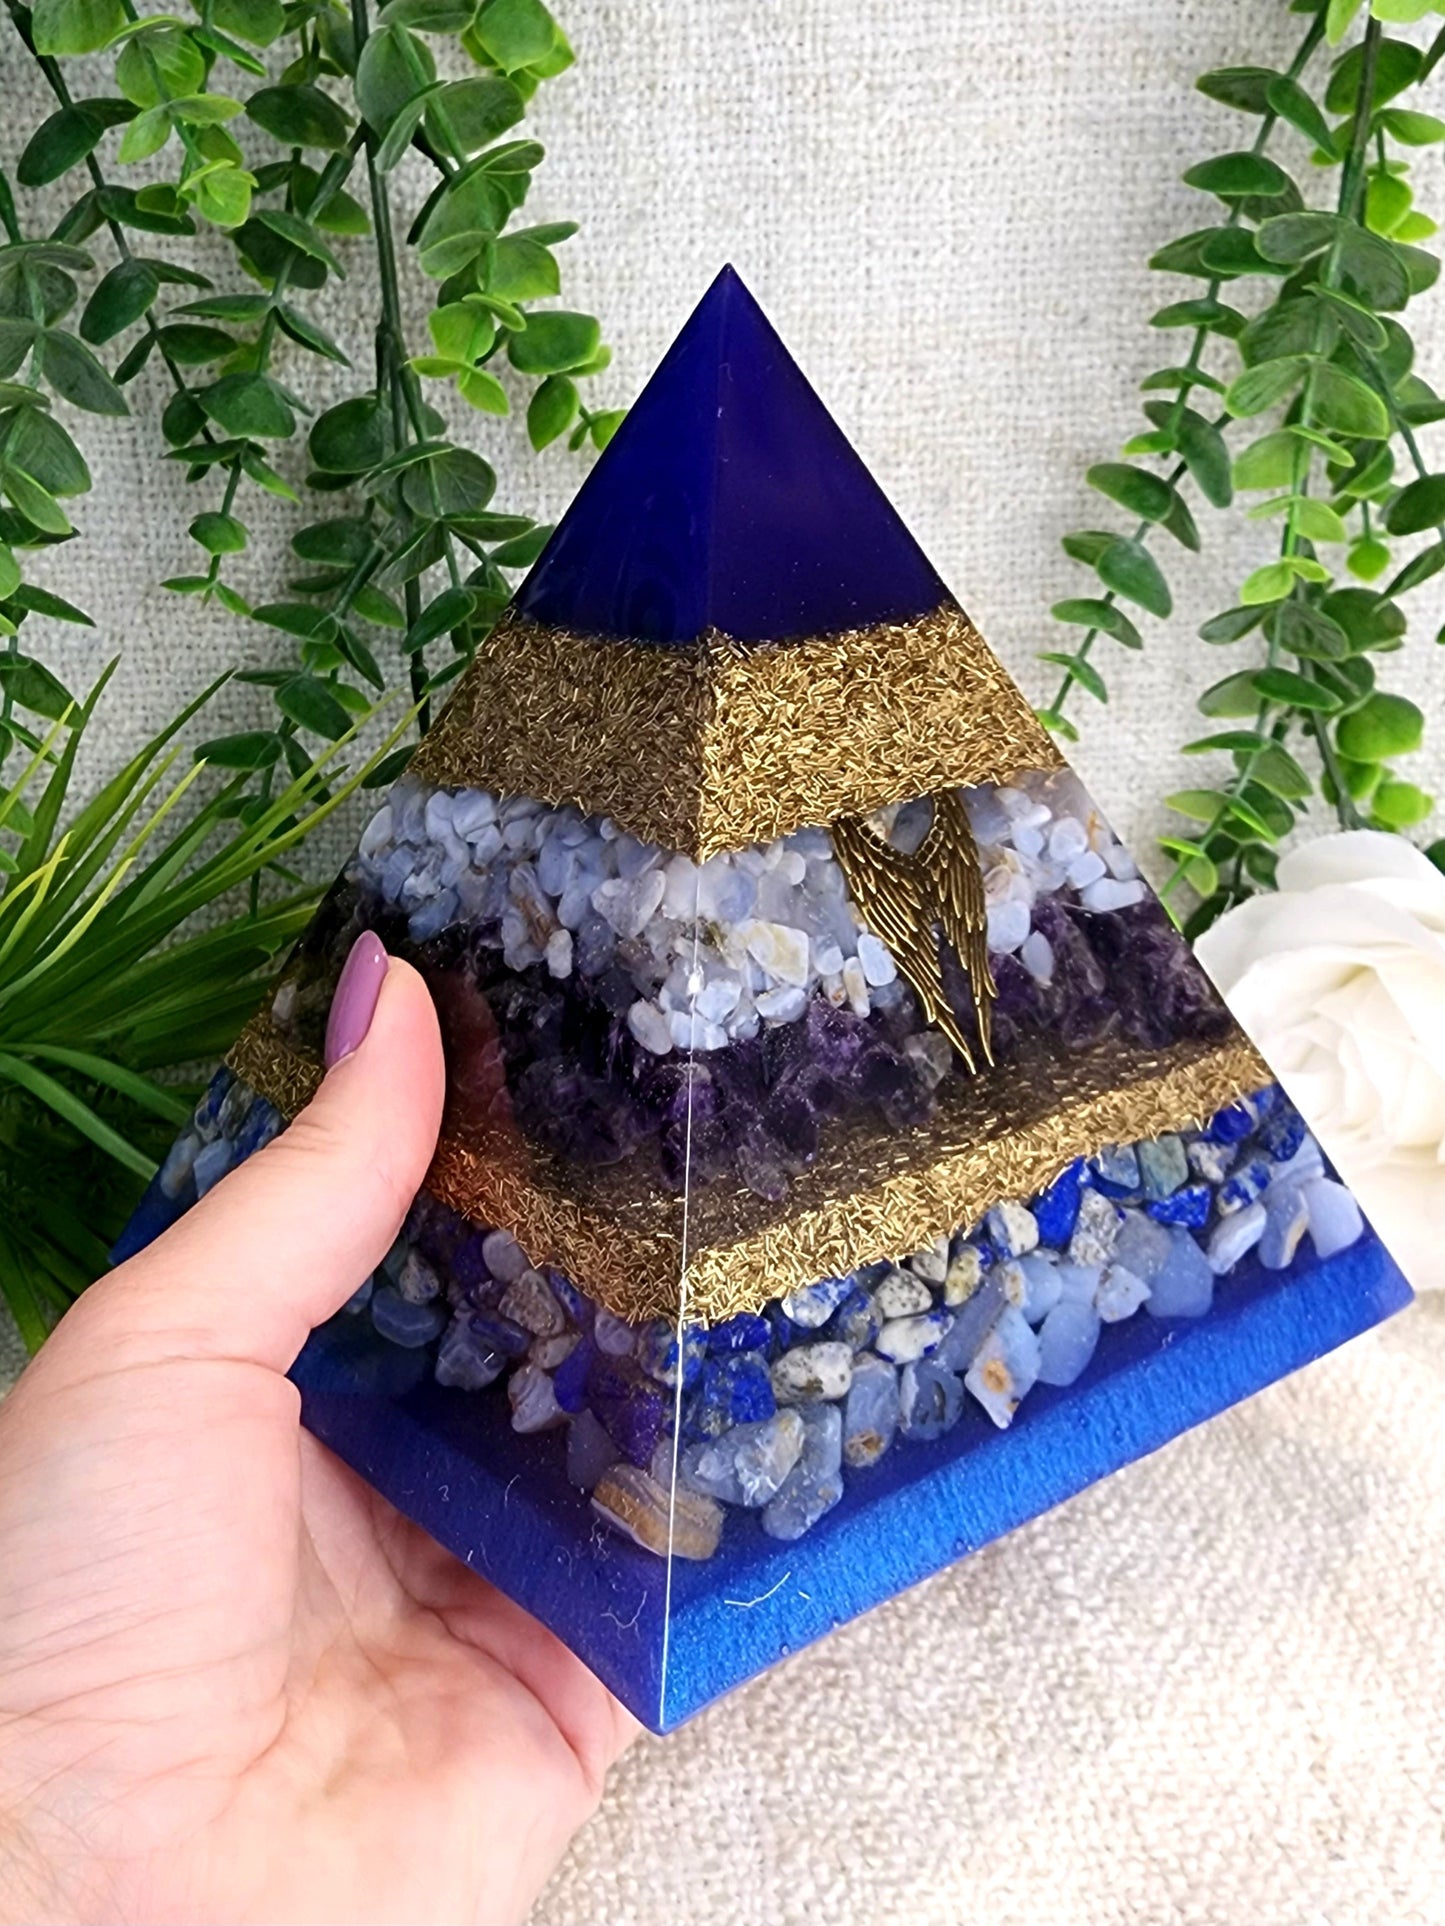 ARCHANGEL ZADKIEL - Orgonite Pyramid - EMF Protector - Blue Lace Agate, Amethyst, Lapis Lazuli, Blue Chalcedony and Brass Metal